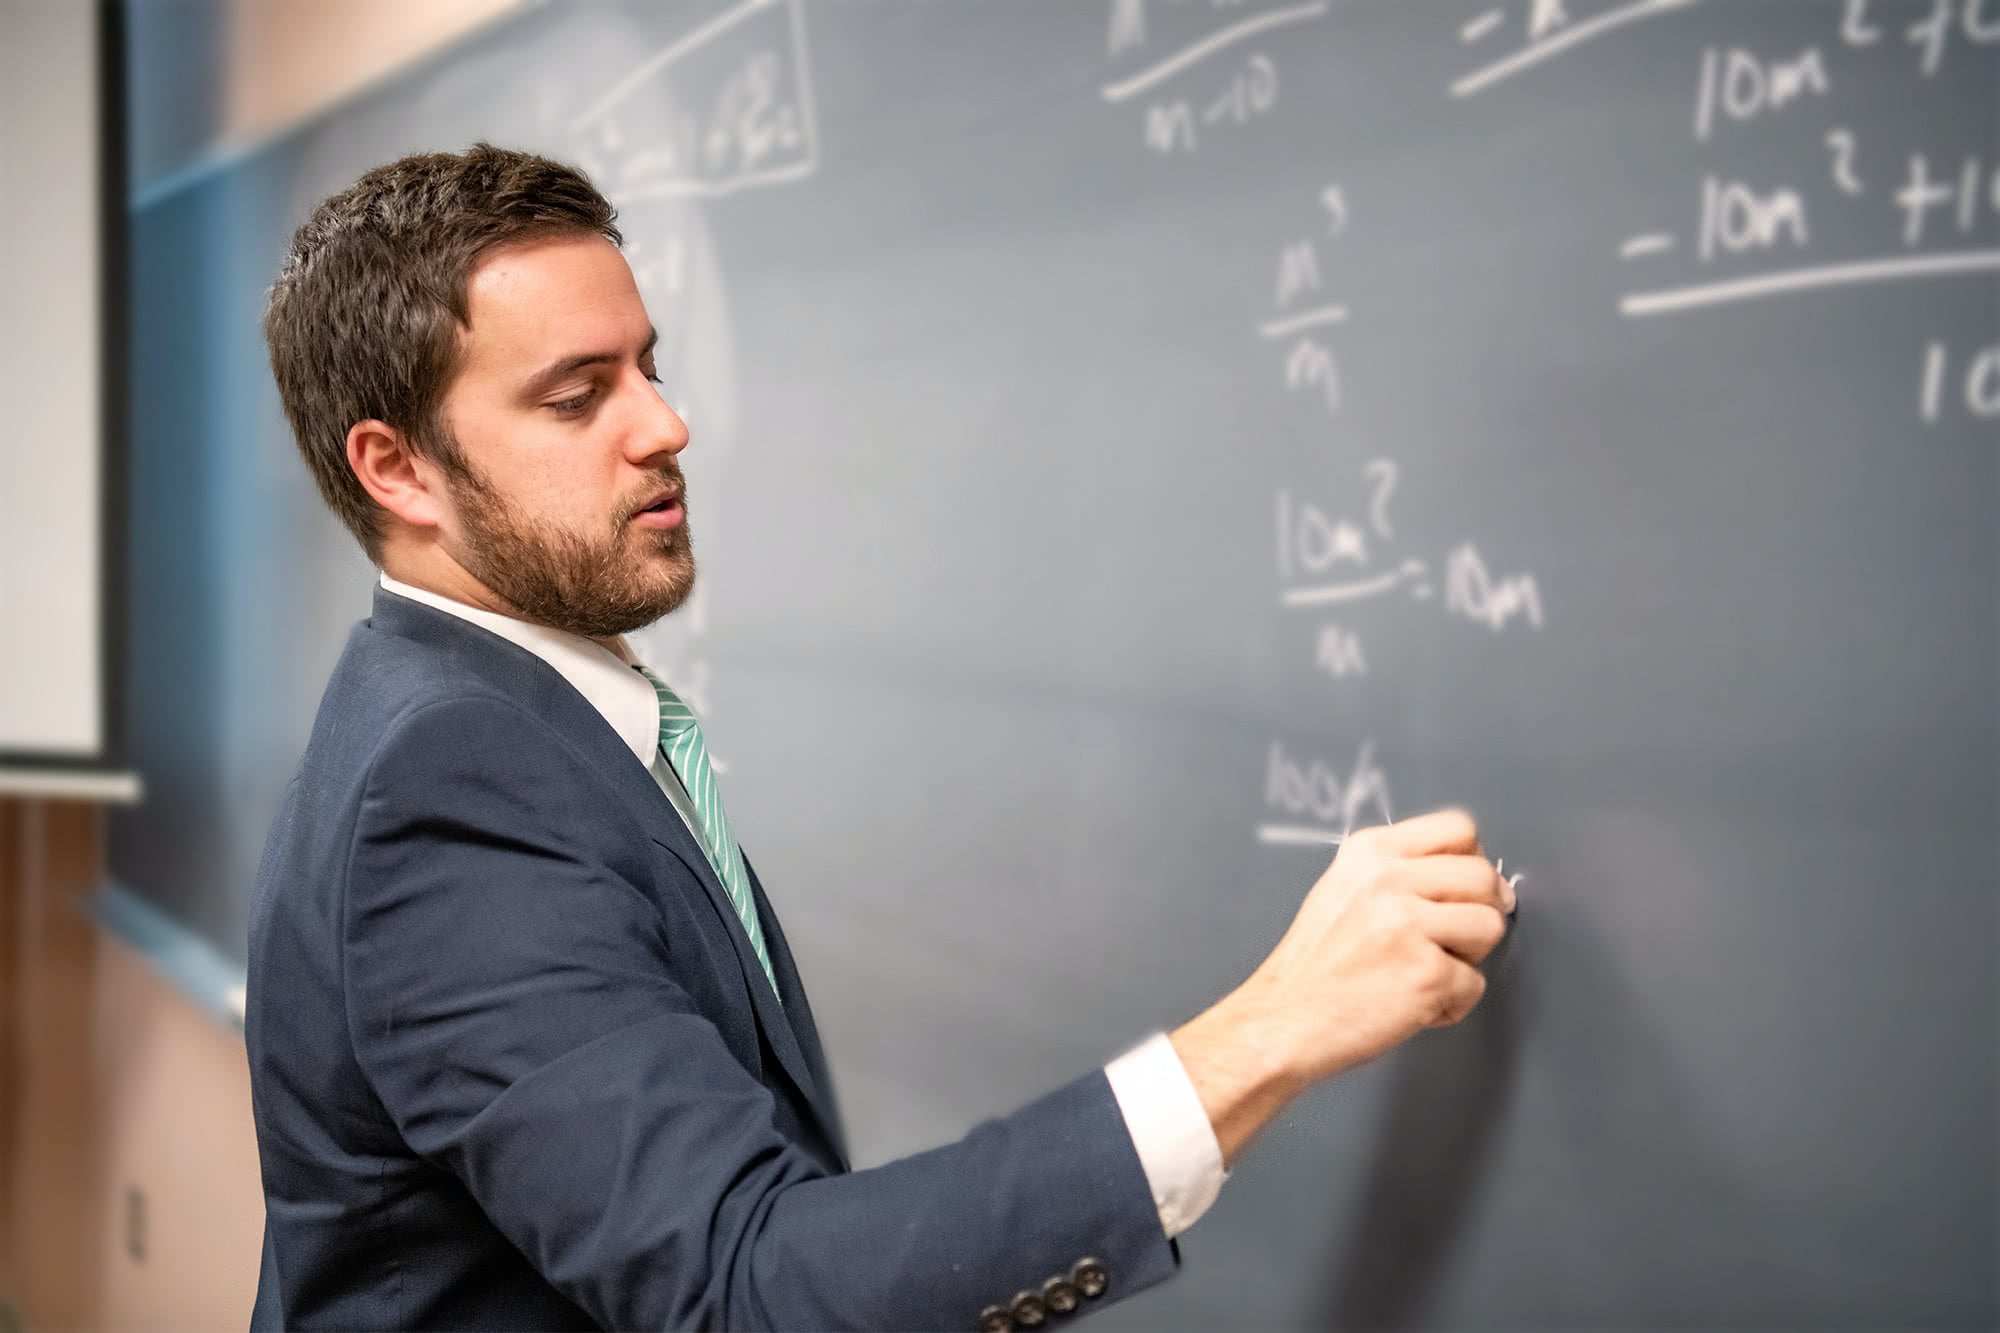 Male interterm teacher writing with chalk on a chalkboard.